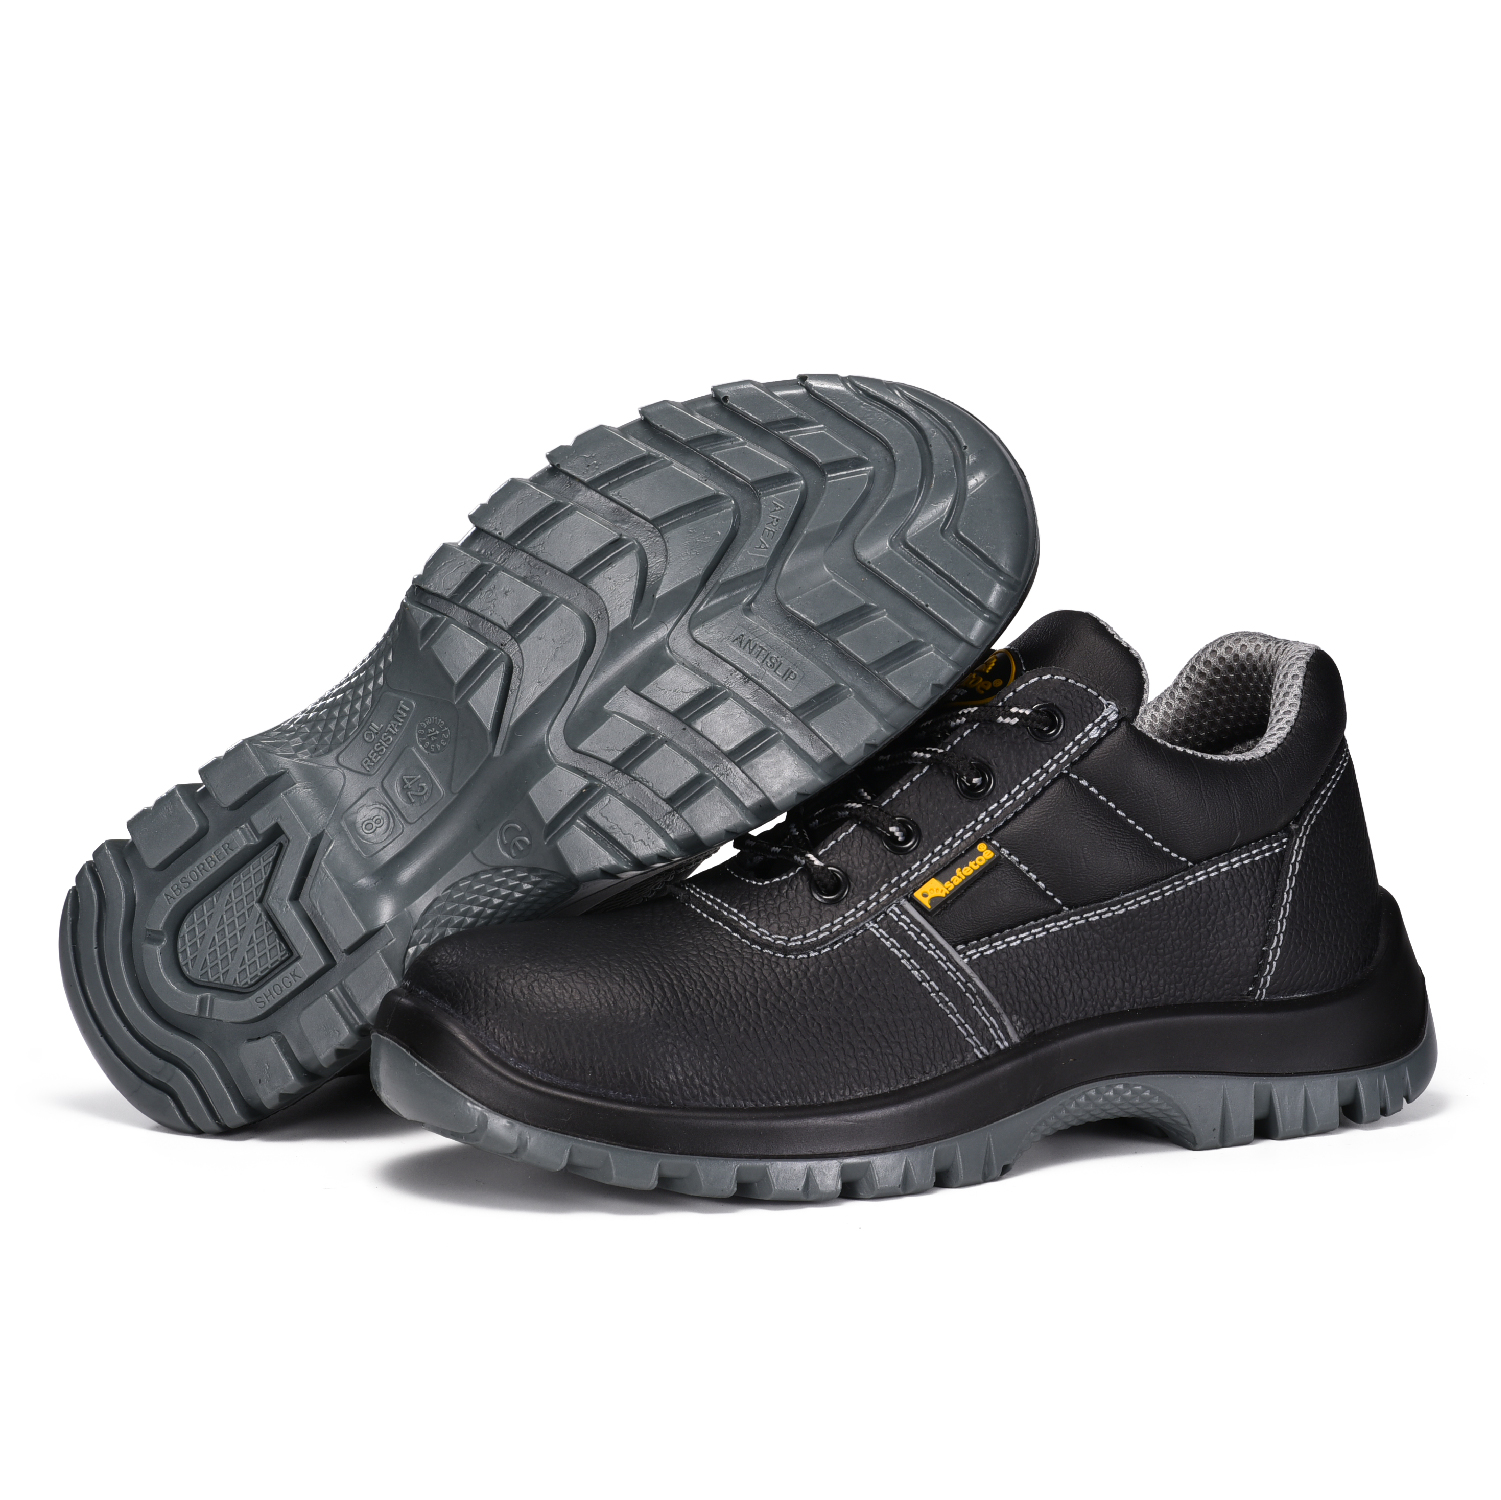 Site Oil Resistant PPE Safety Shoes L-7006